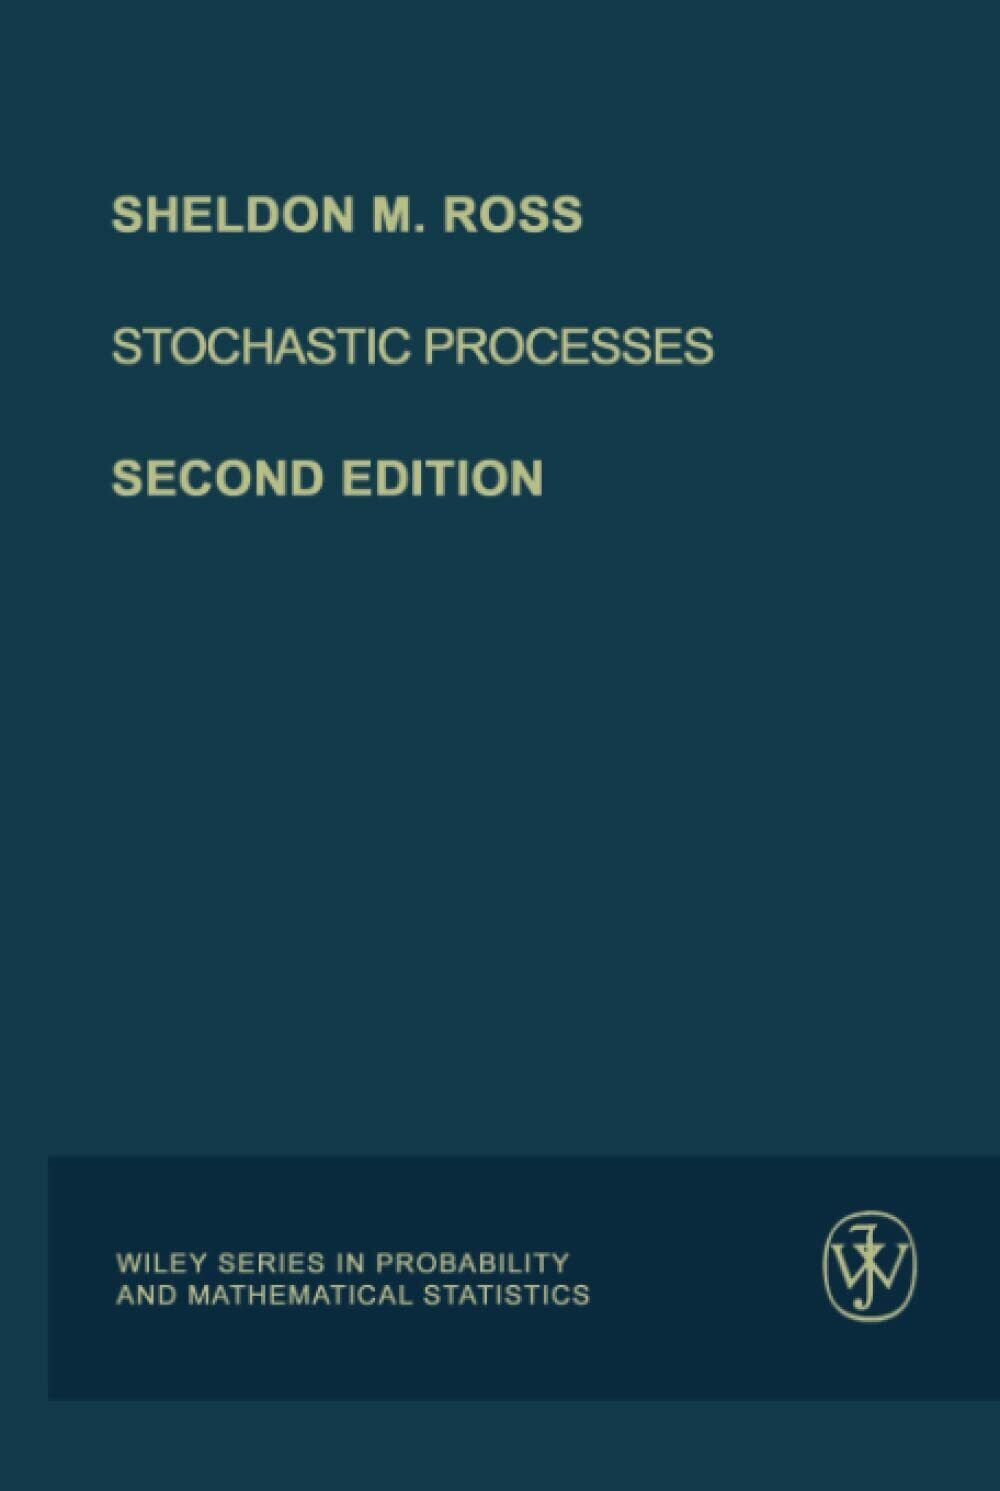 Stochastic Processes - Sheldon M. Ross - John Wiley & Sons, 1995